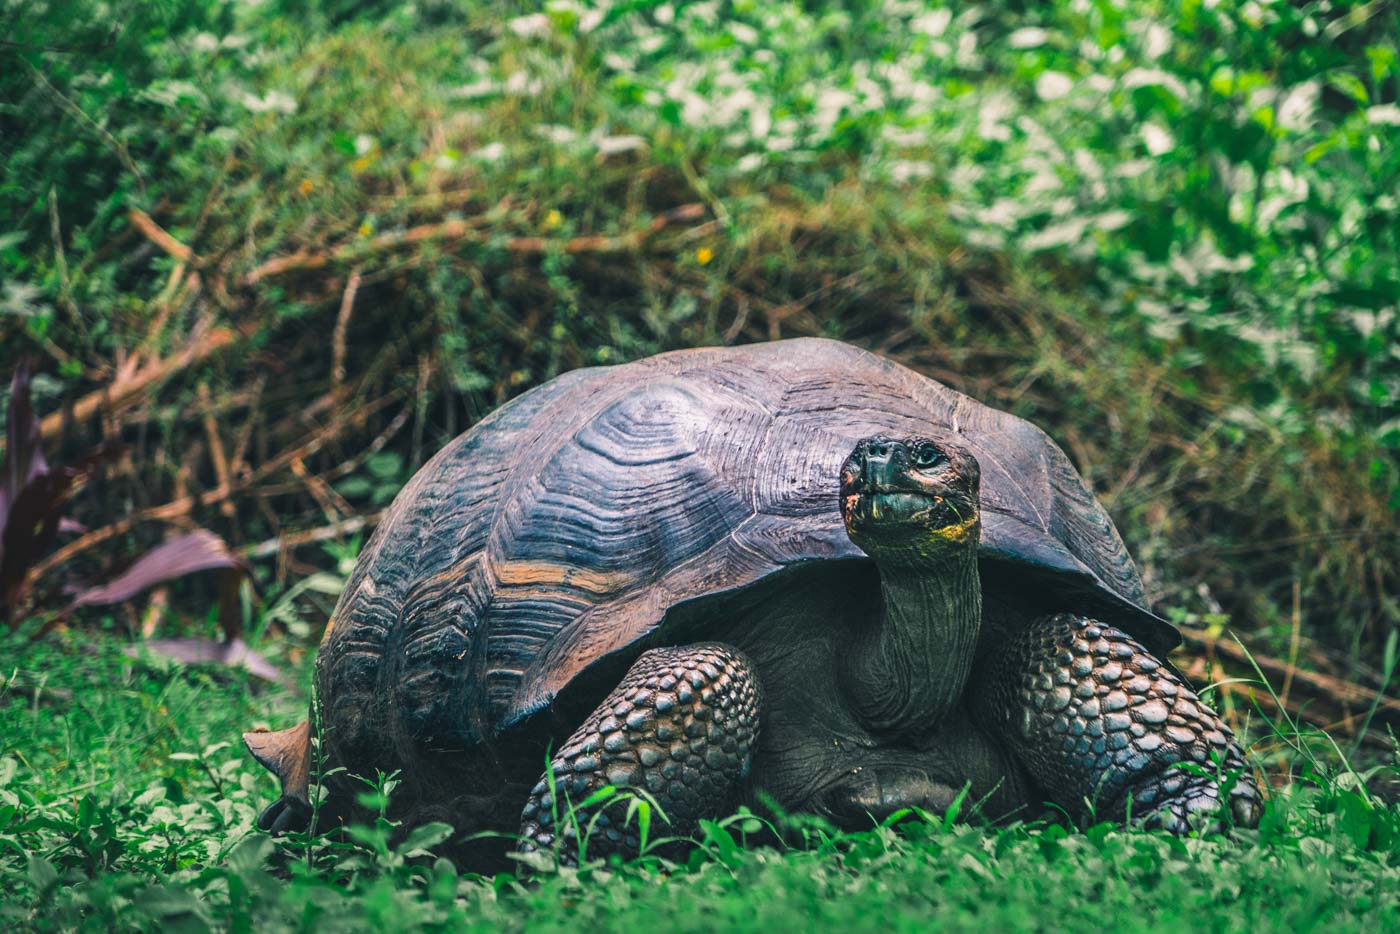 Giant tortoise roaming free at the El Chato Ranch on Santa Crus Island, Galapagos